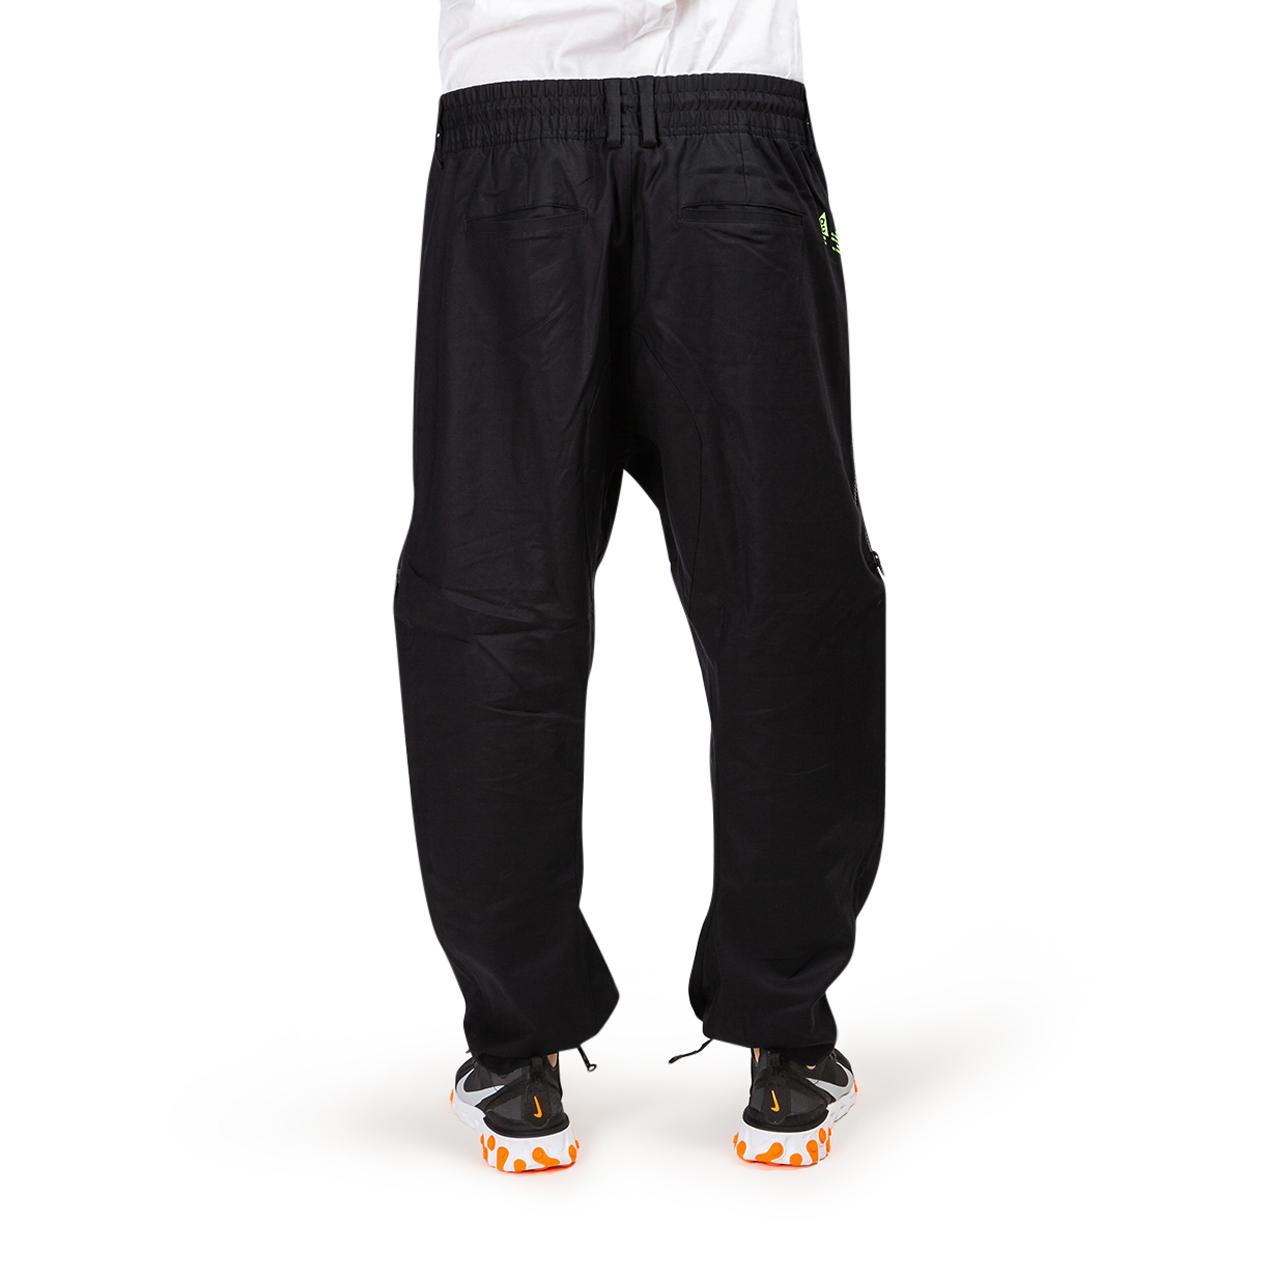 Nike Cotton Nike Nrg Acg Cargo Pant in Black for Men - Lyst